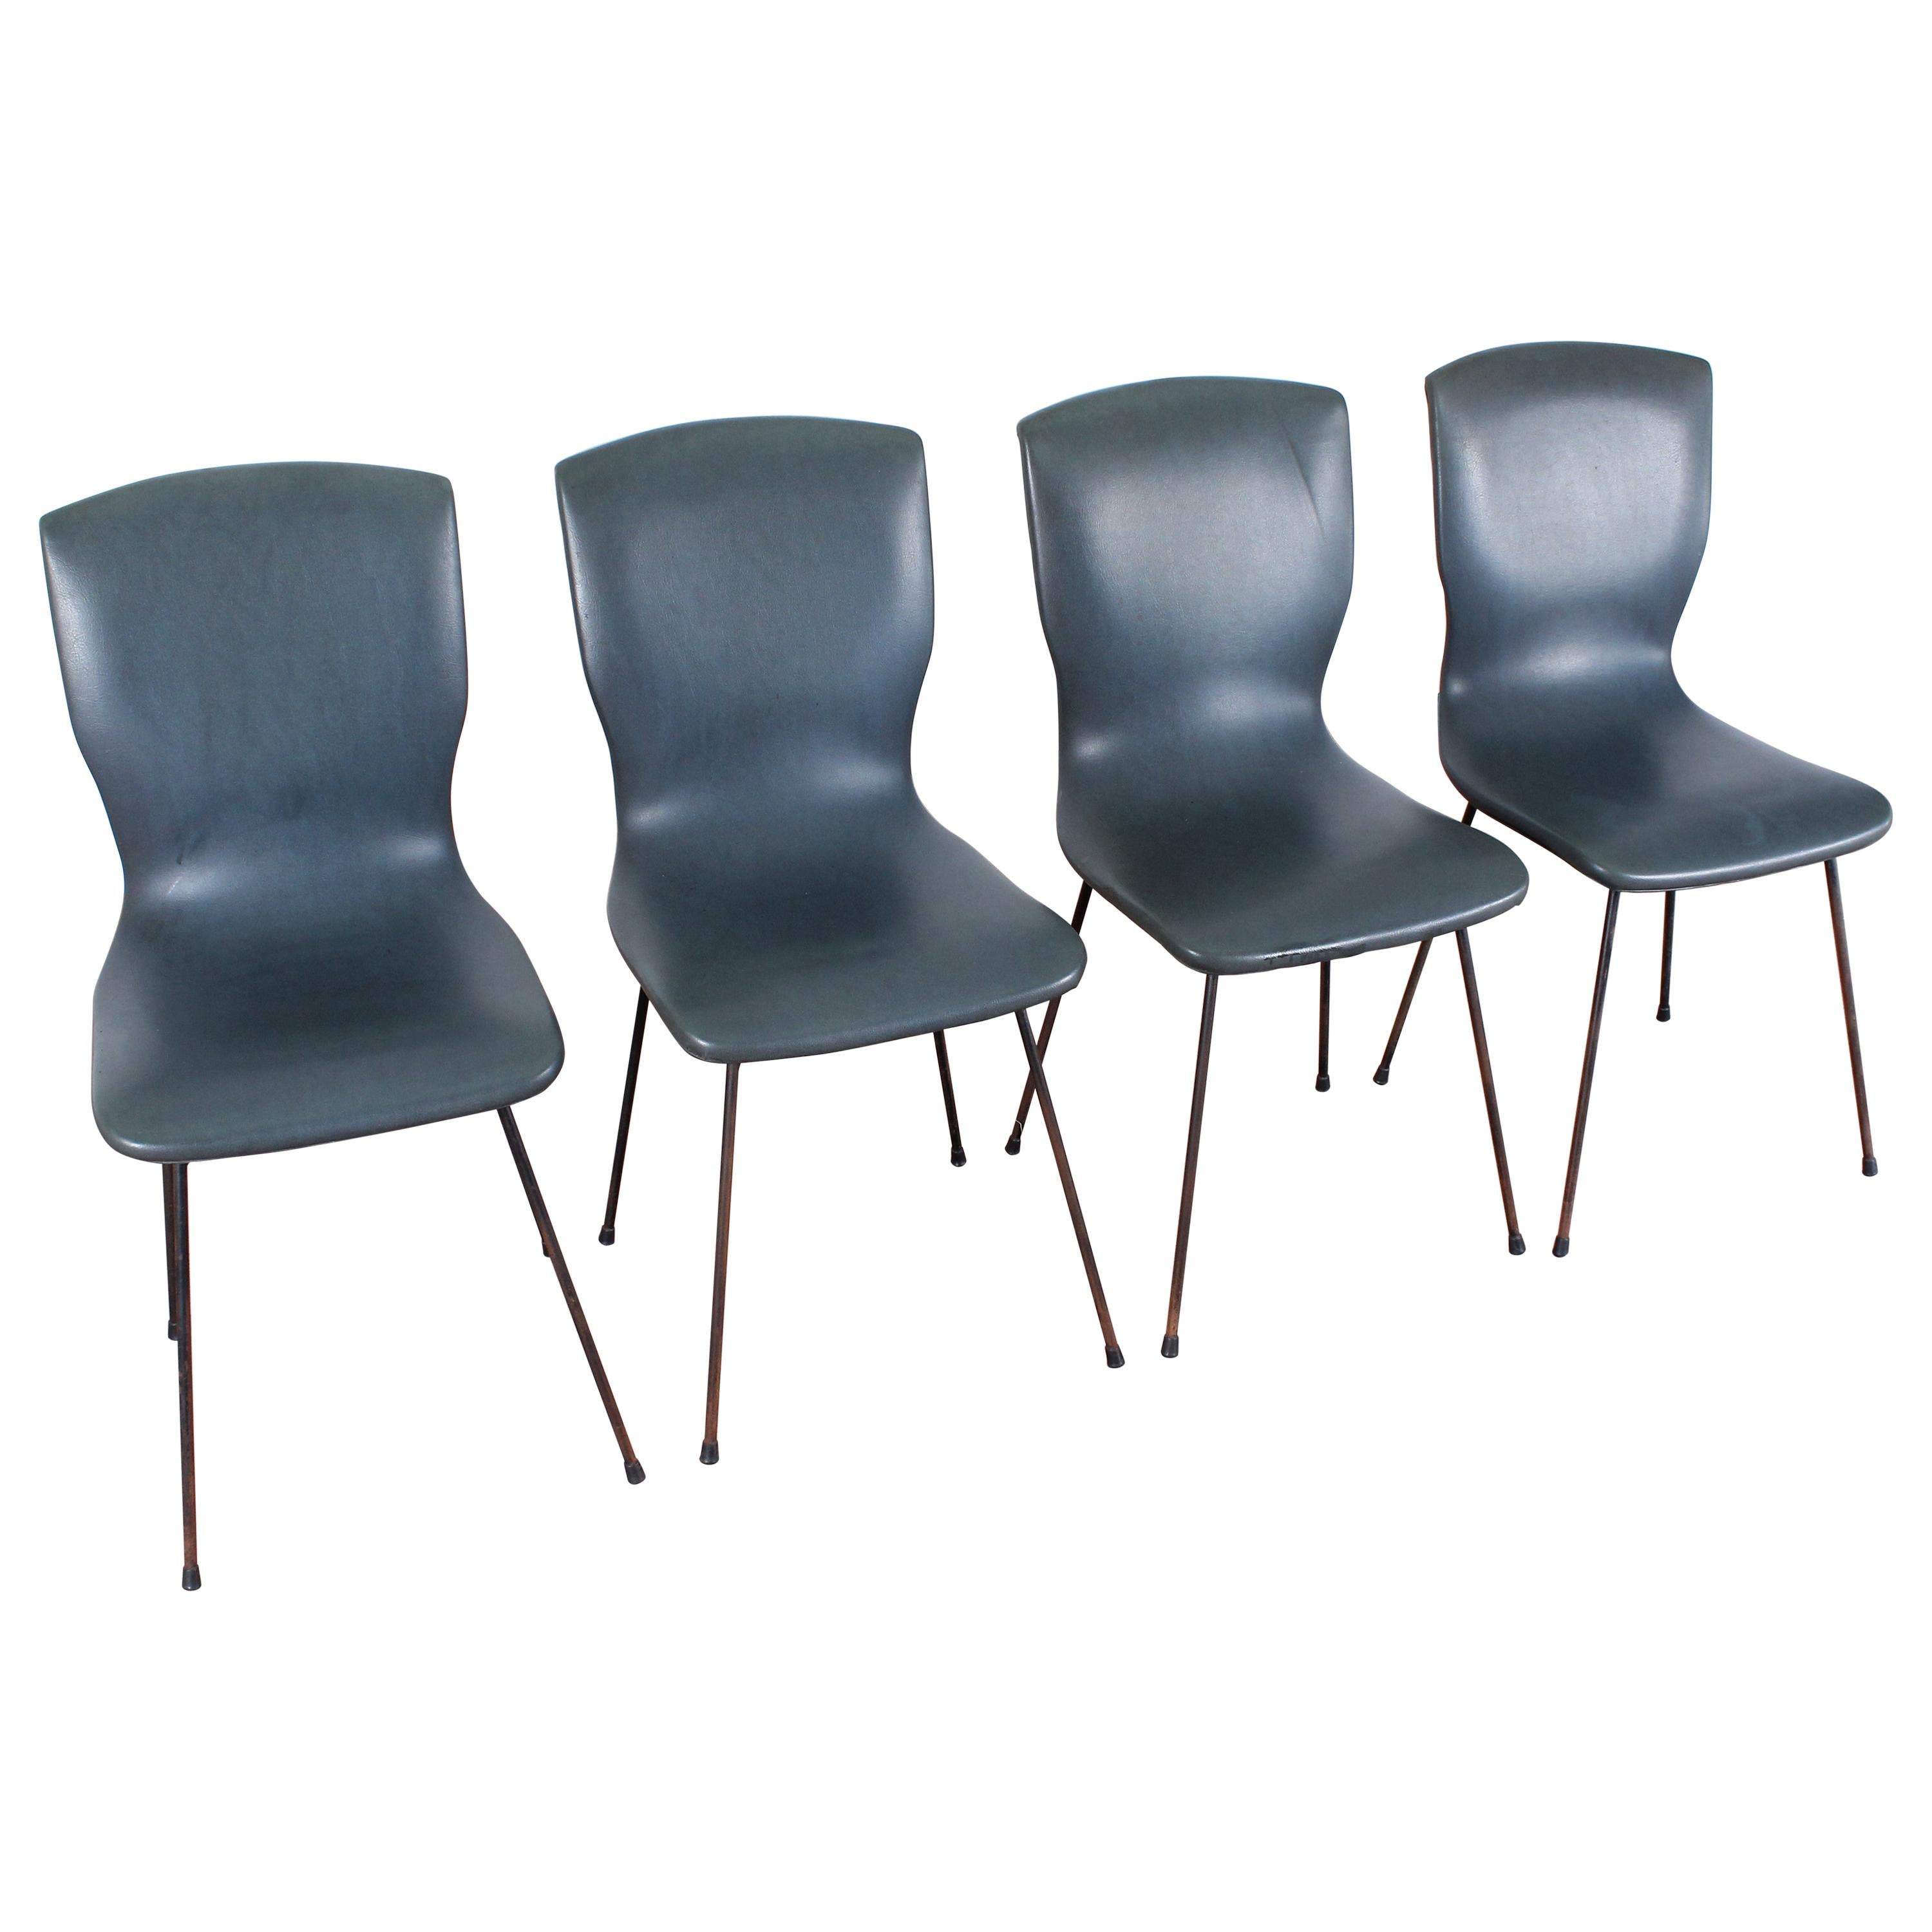 Midcentury Gastone Rinaldi Modern Dining Chairs Set of 4, 1960s, Italy